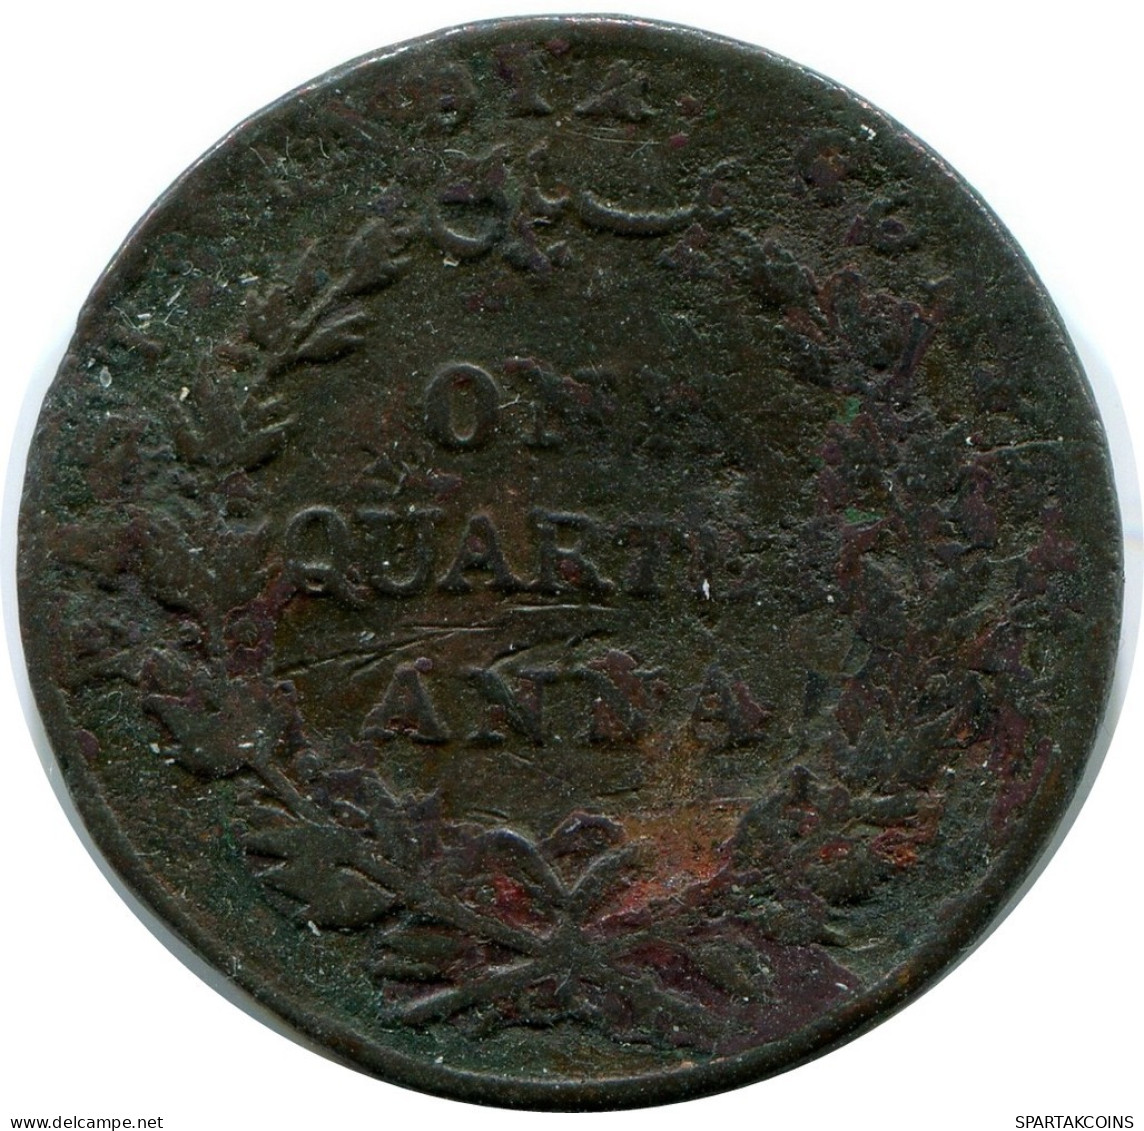 1/4 ANNA 1935 INDIEN INDIA Münze #AY259.2.D.A - Indien